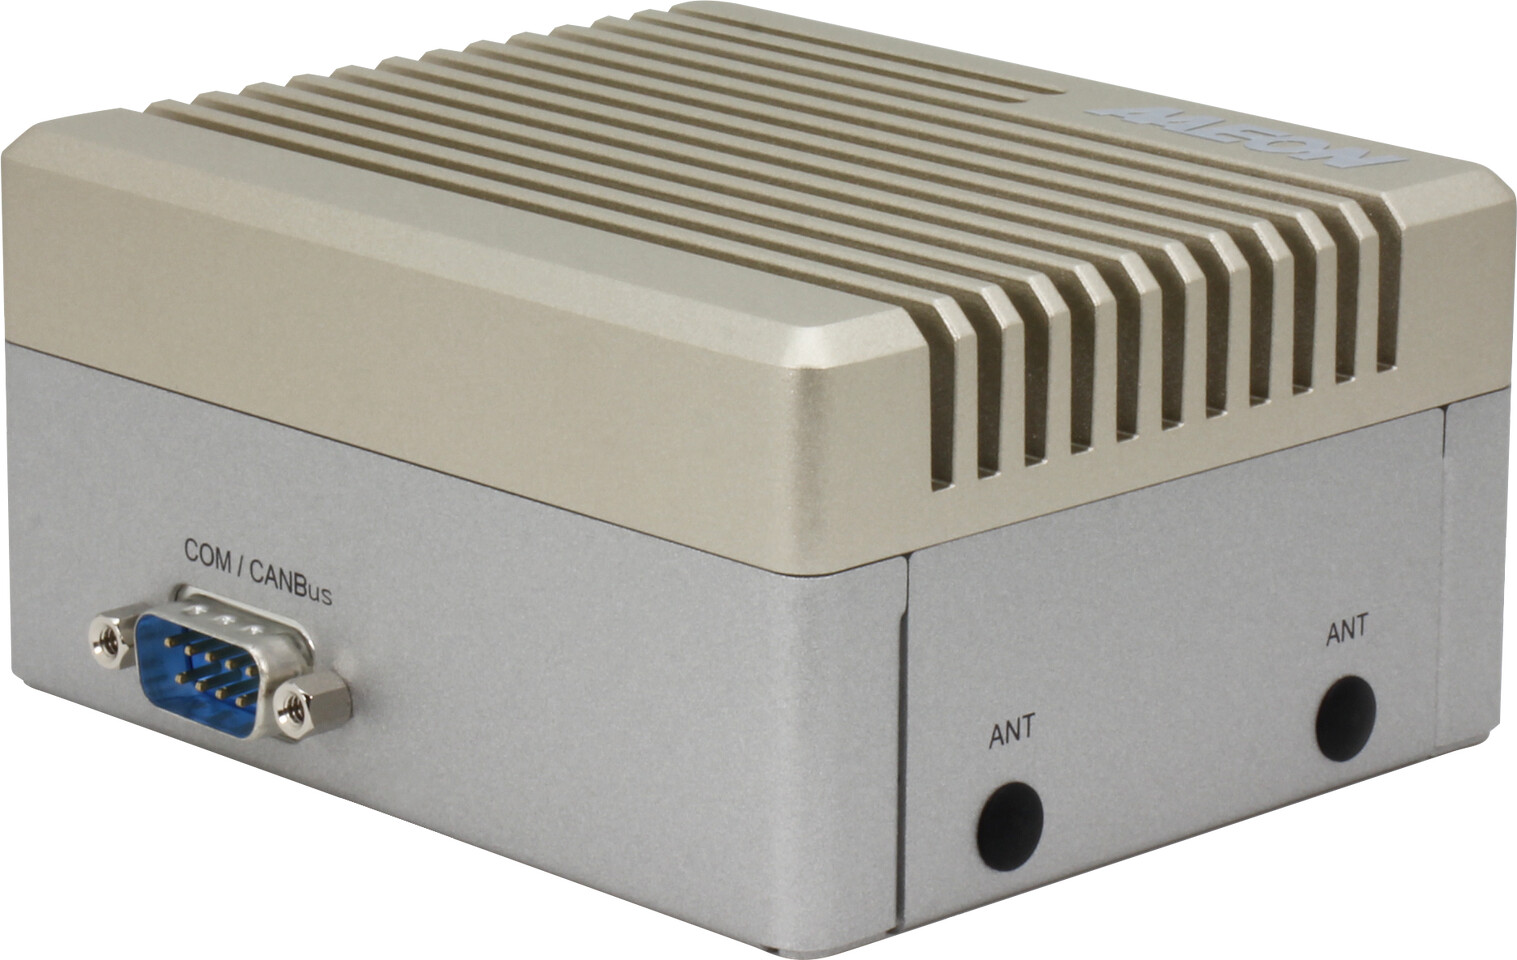 AAEON Introduces BOXER-8651AI Mini PC: Harnessing NVIDIA Jetson Orin NX for Optimal Performance